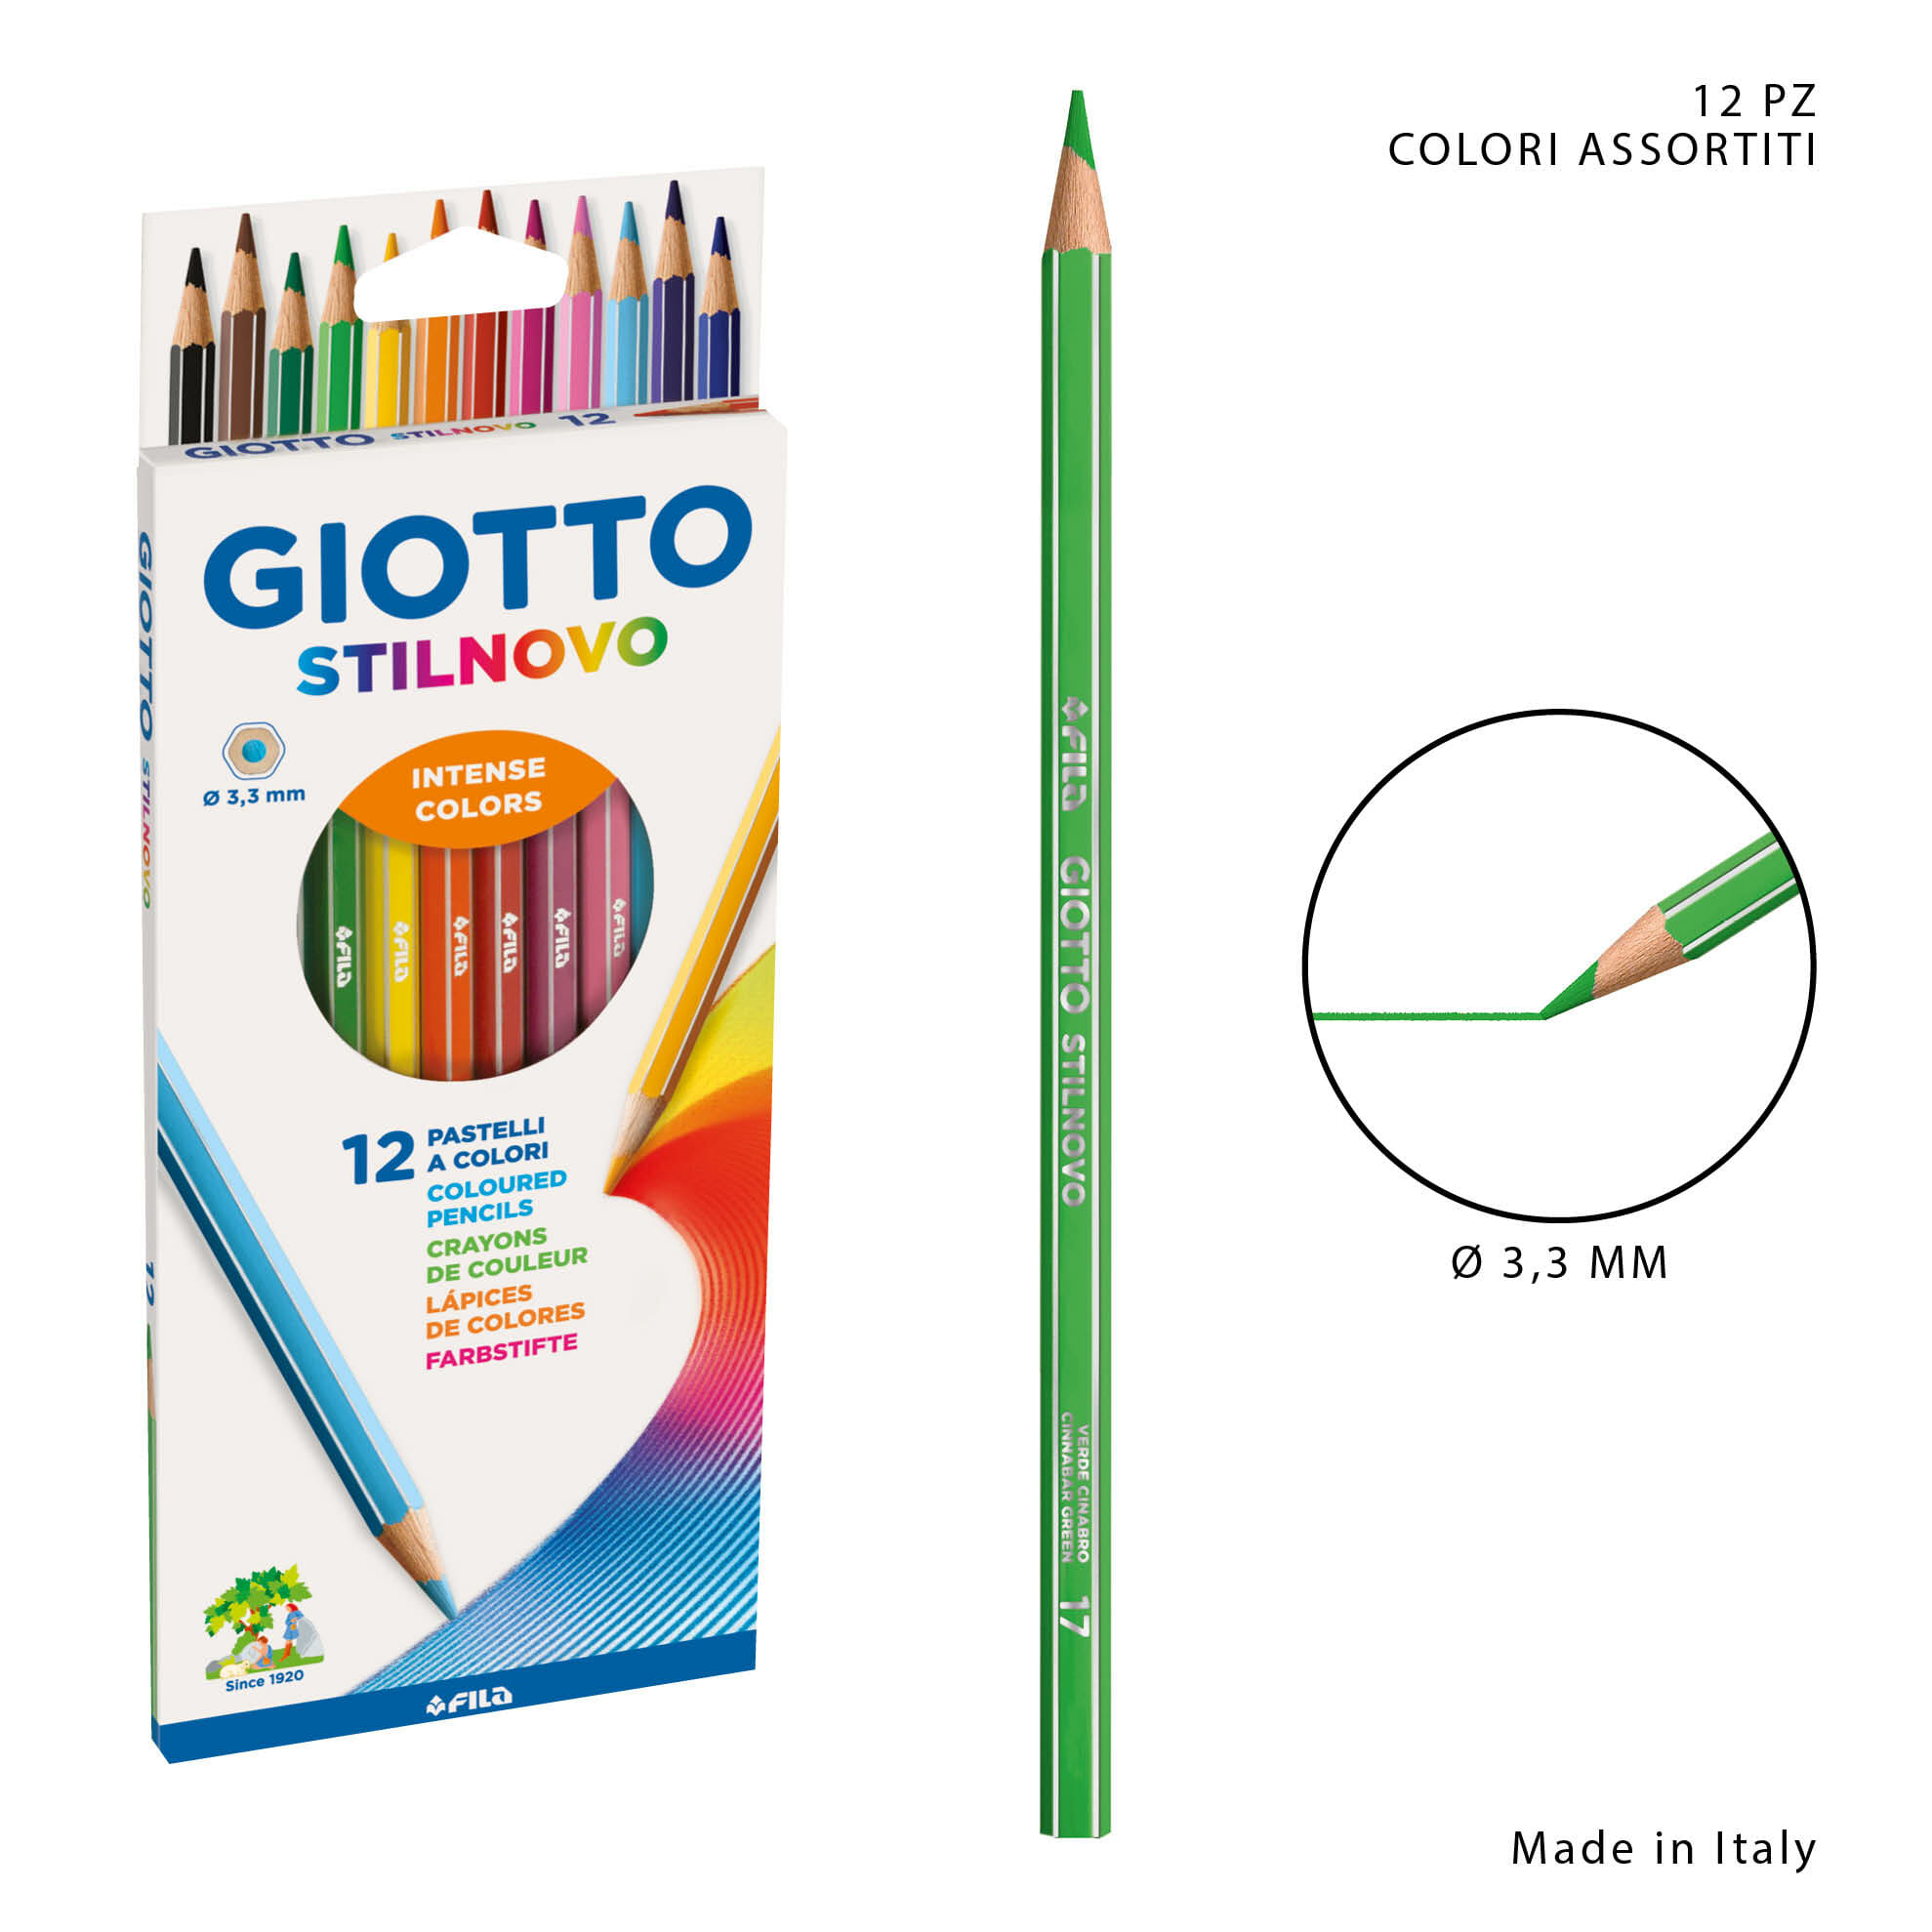 Giotto stilnovo matite colorate 12 pz